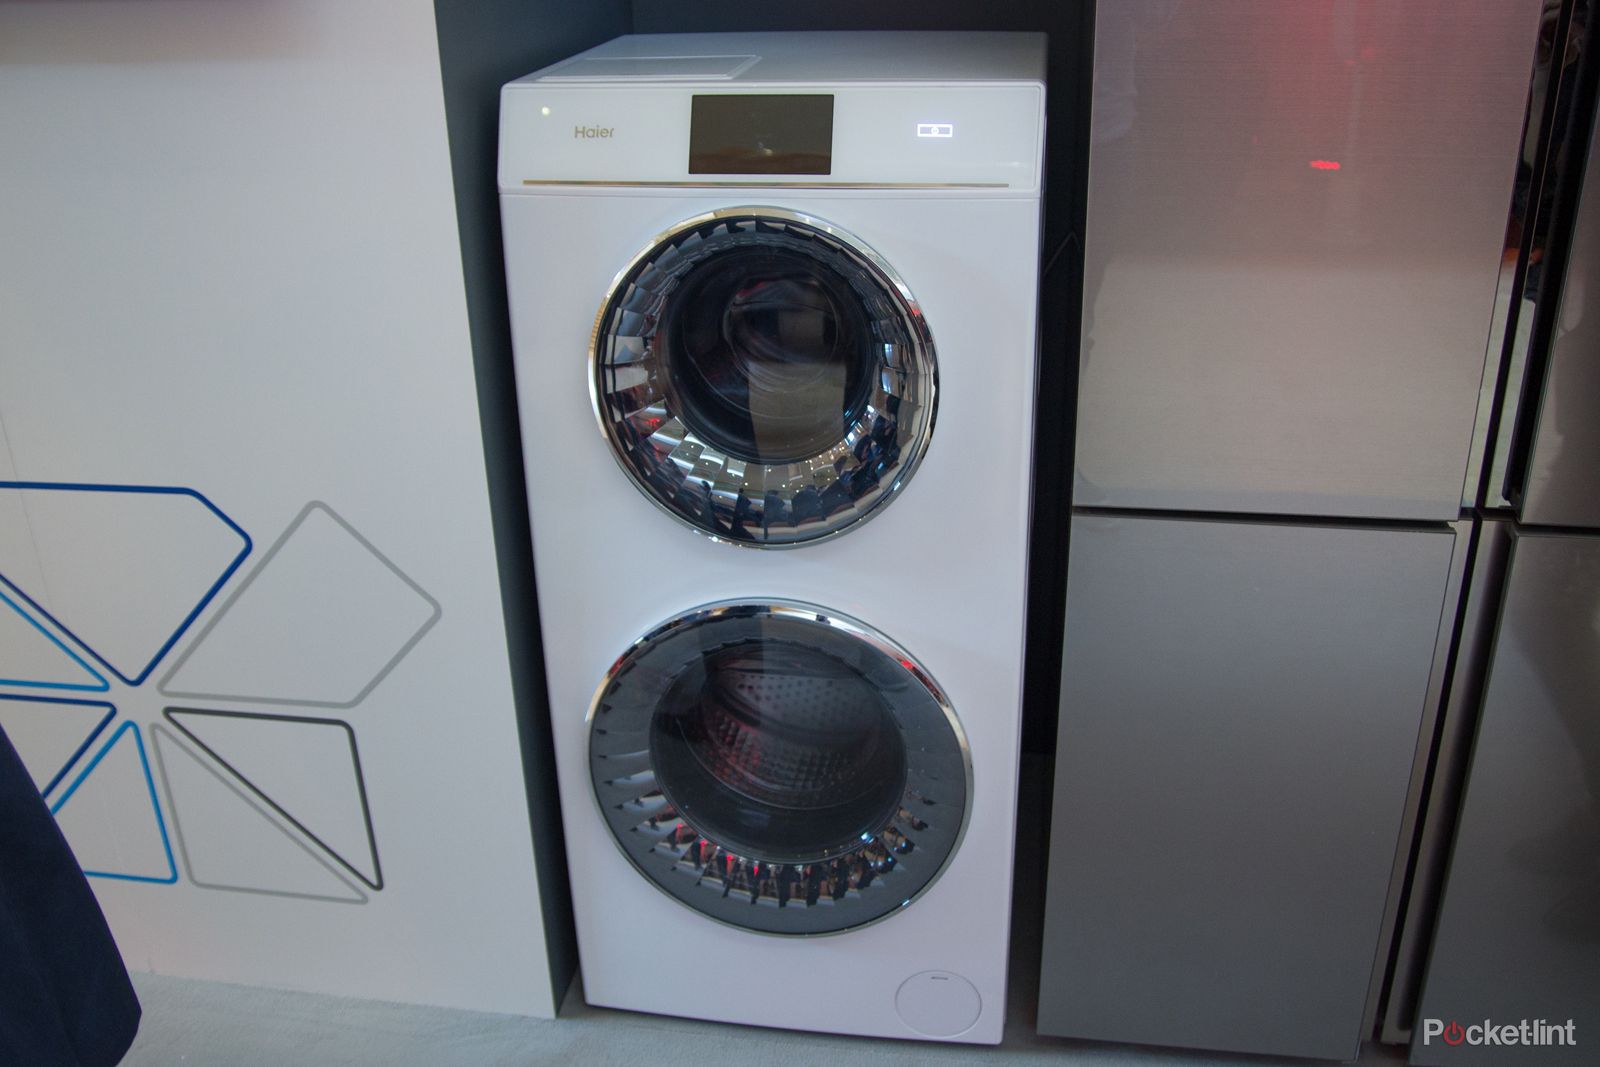 haier dual drum washing machine offers smart control smart washing flexibility image 1